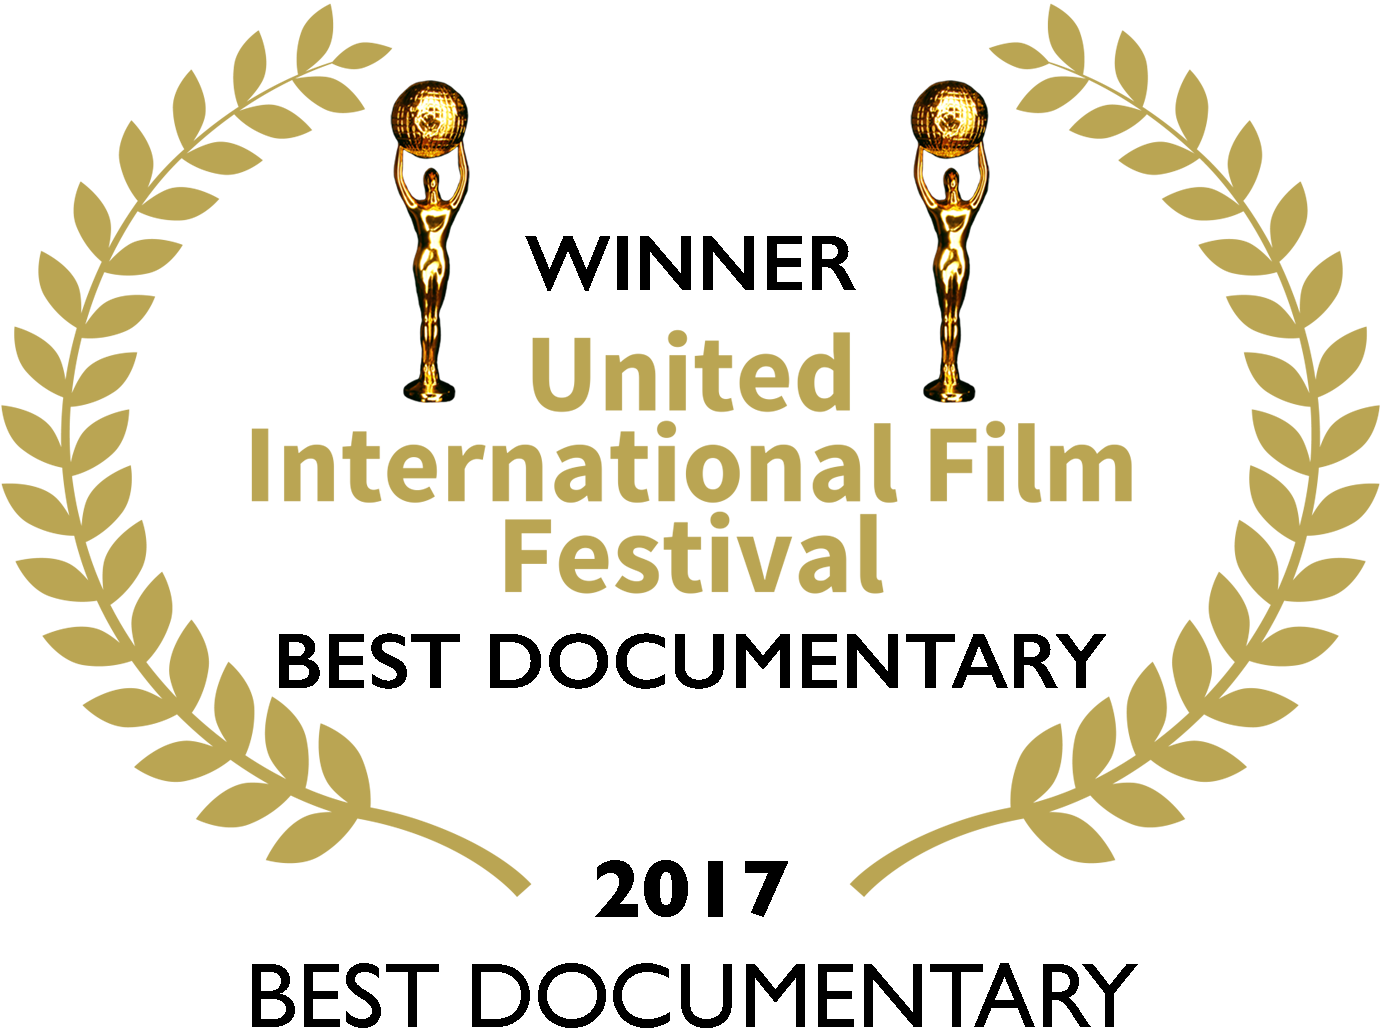 Sofia Wellman - Whats Love Got To Do With It - Film by Sofia Wellman - United International Film Festival - Winner - 2017